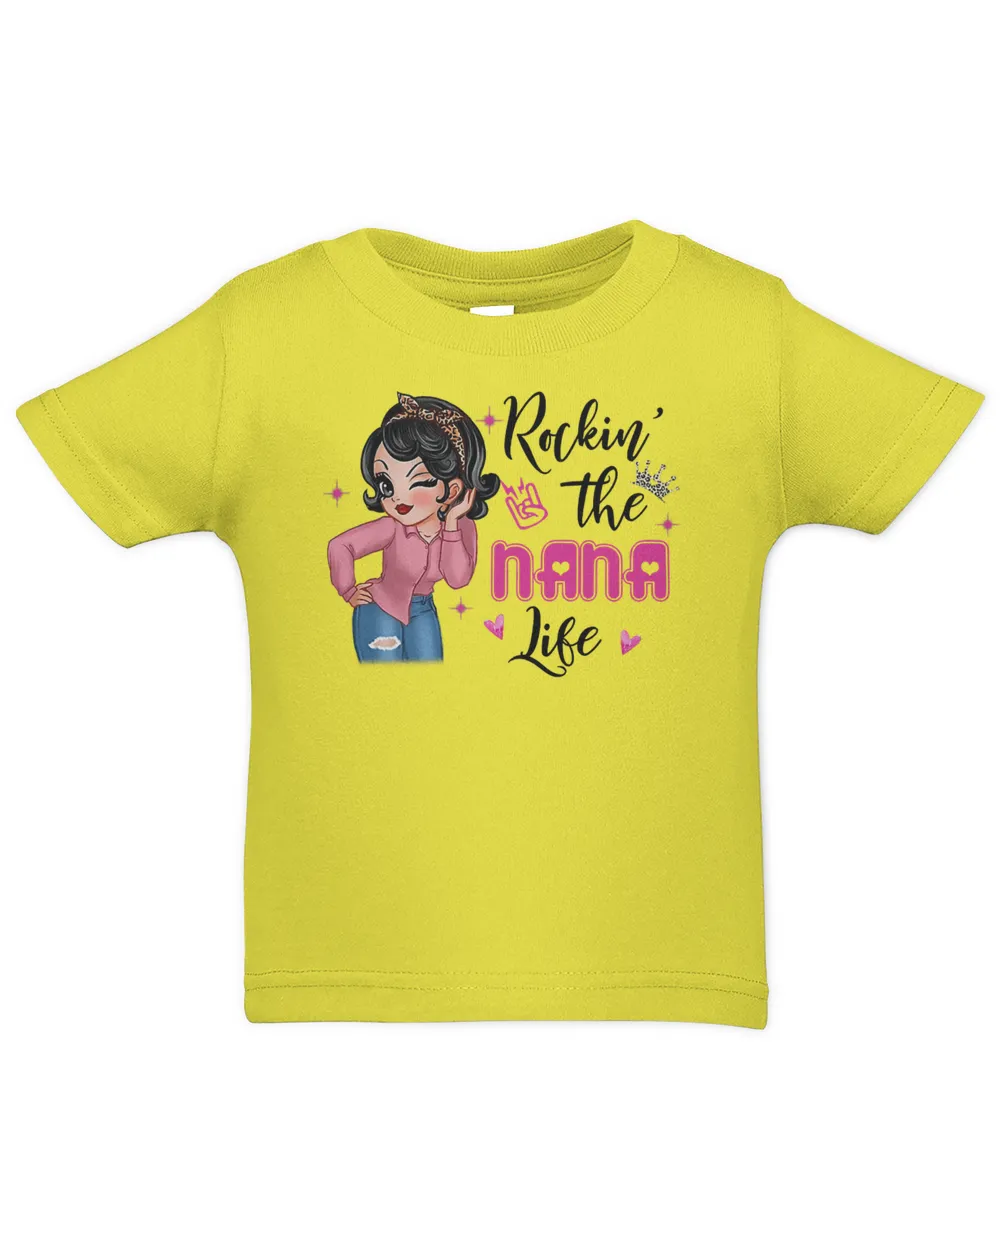 Womens Nana Life Sassy Girl Rockin' The Nana Life T-Shirt